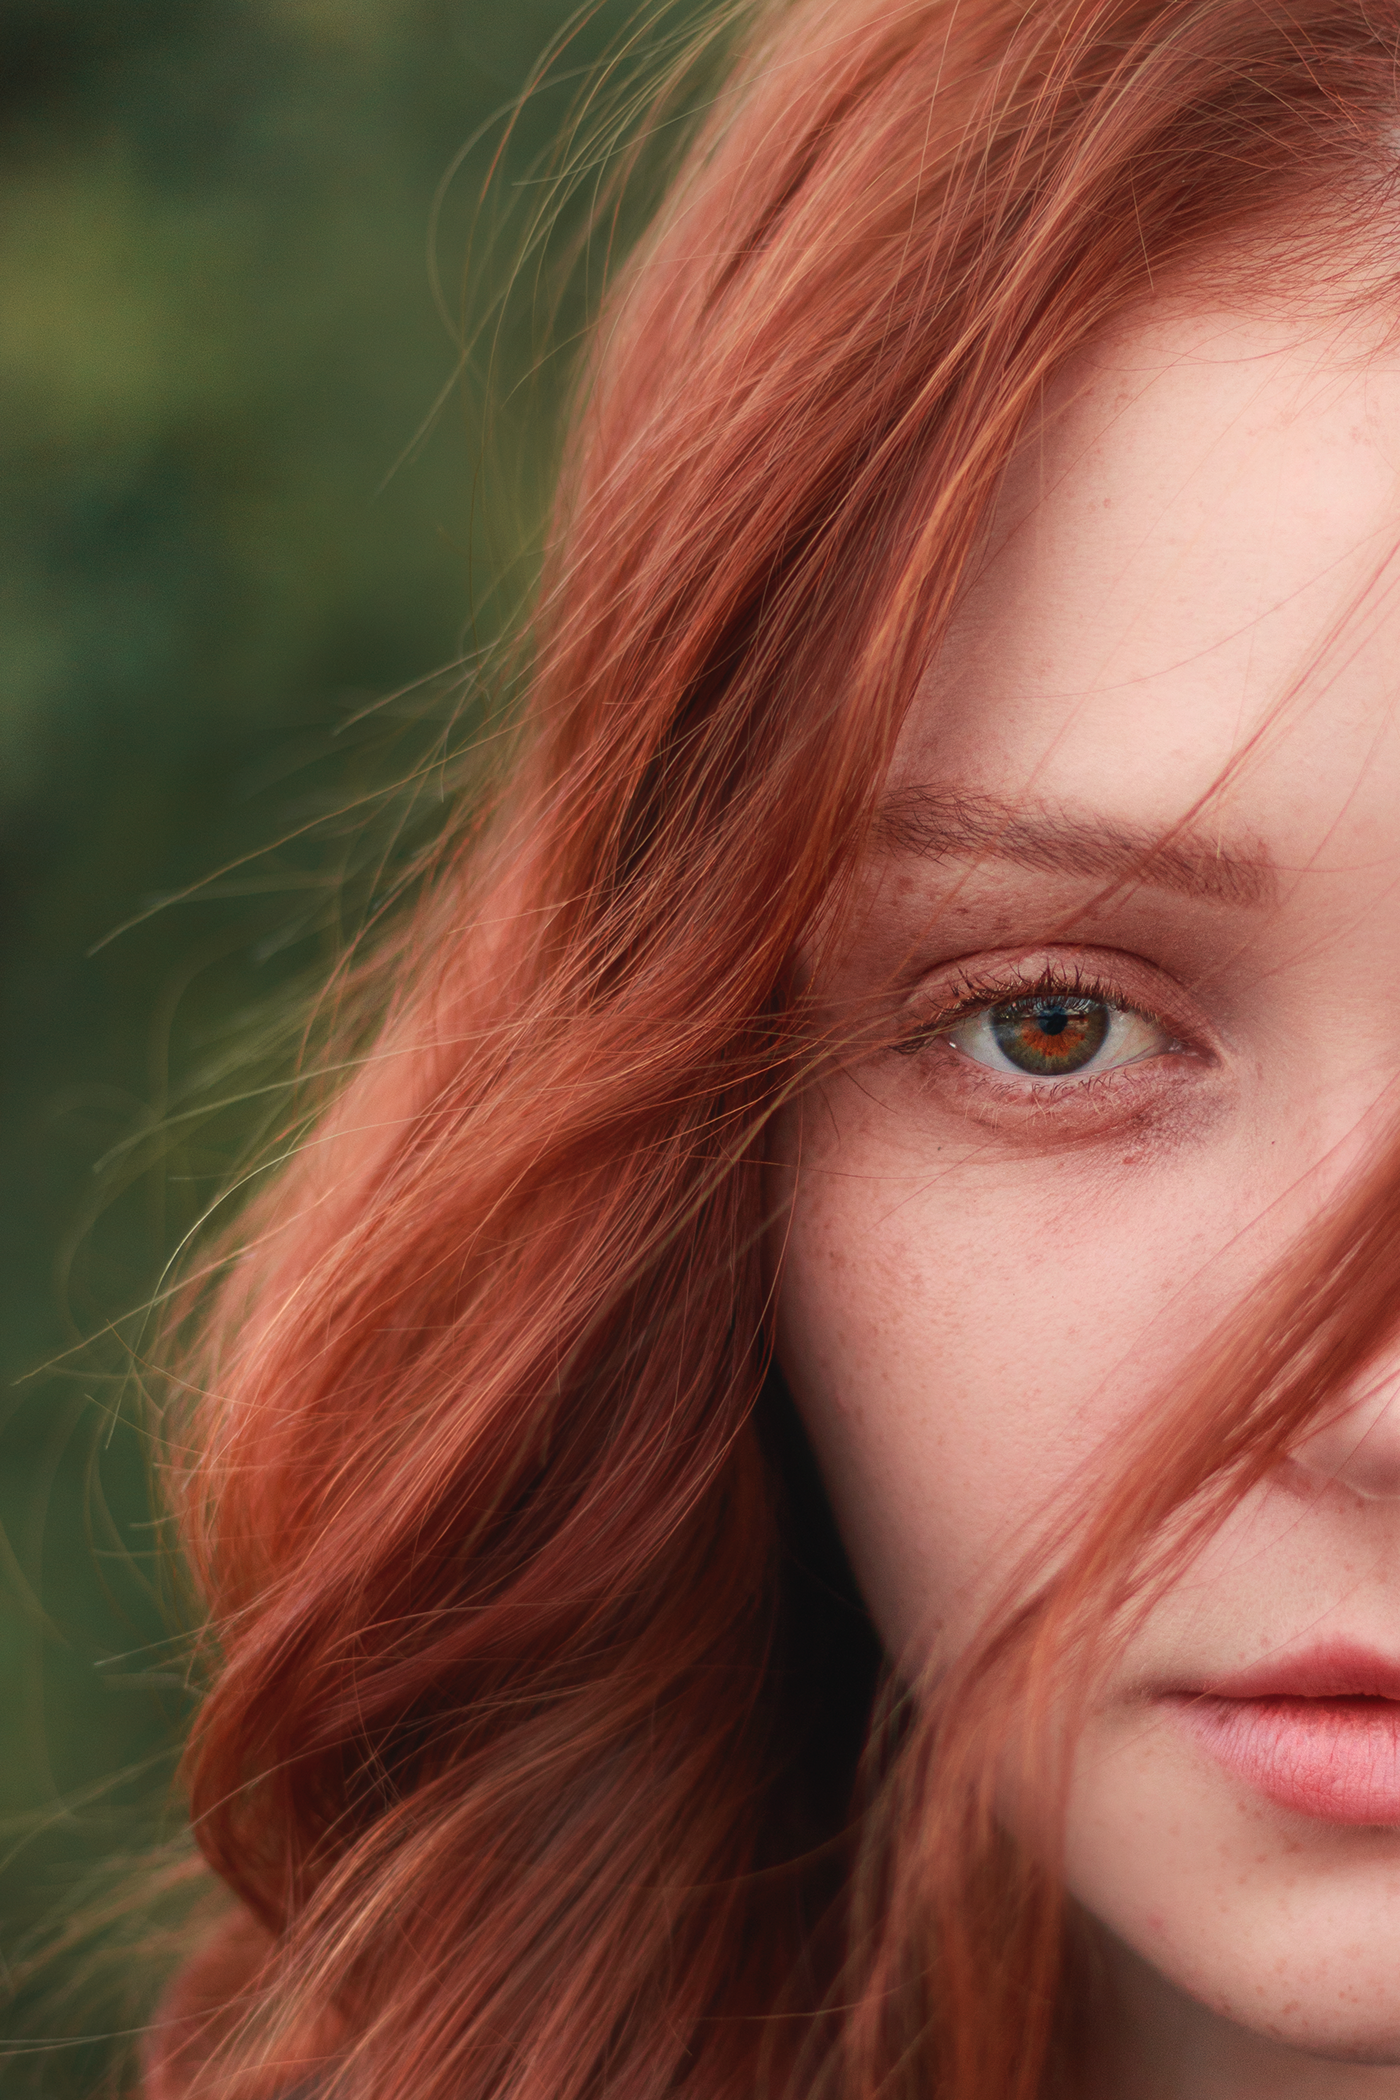 redhead ruiva ensaio fotográfico photoshoot portrait woman portrait retoques retouching 